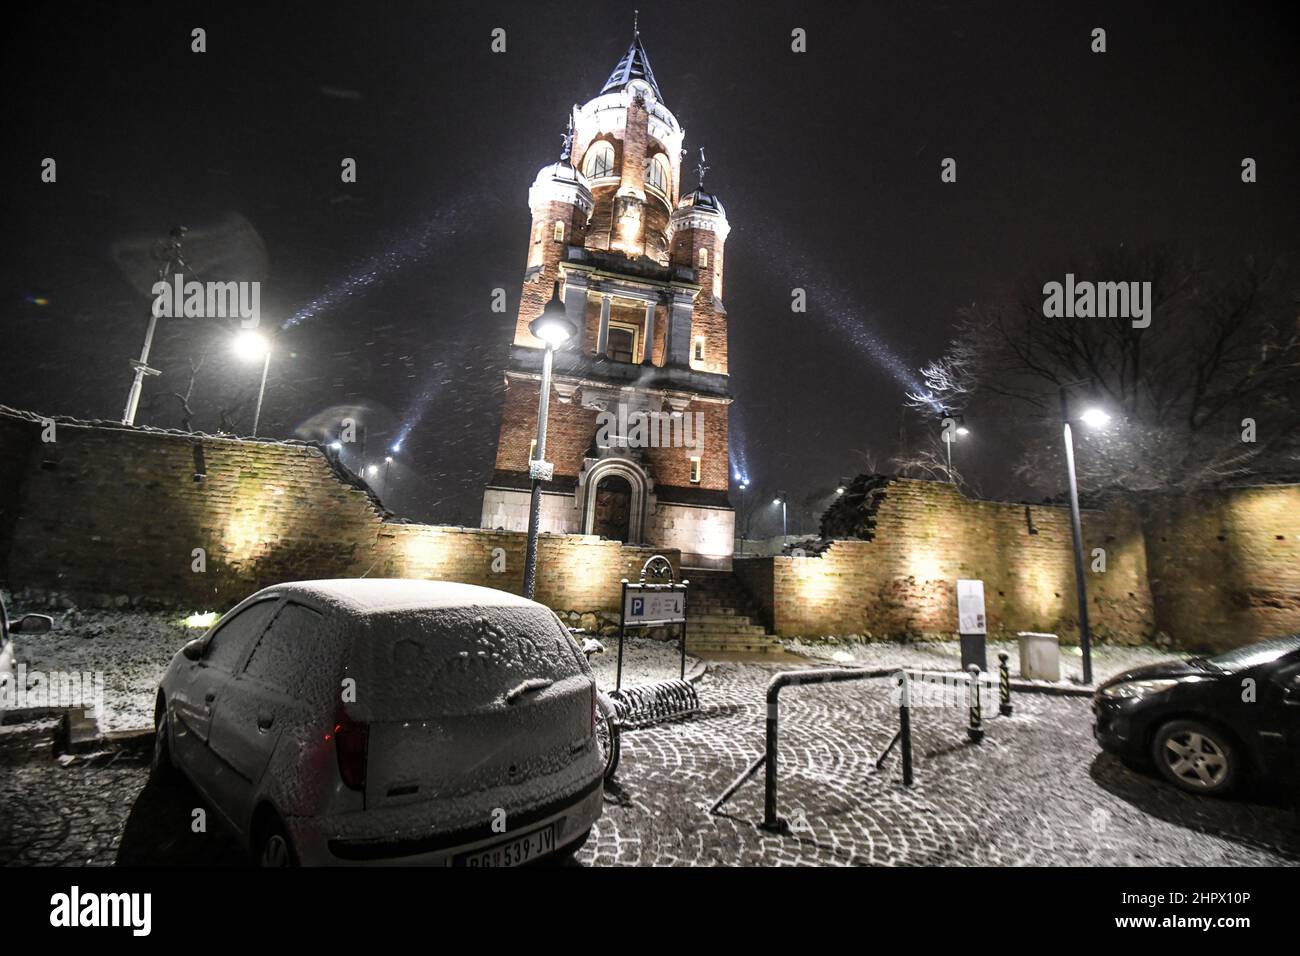 Nieve cayendo en la Torre Gardoš (o Torre del Milenio, también conocida como Kula Sibinjanin Janka). Distrito de Zemun, Belgrado, Serbia Foto de stock